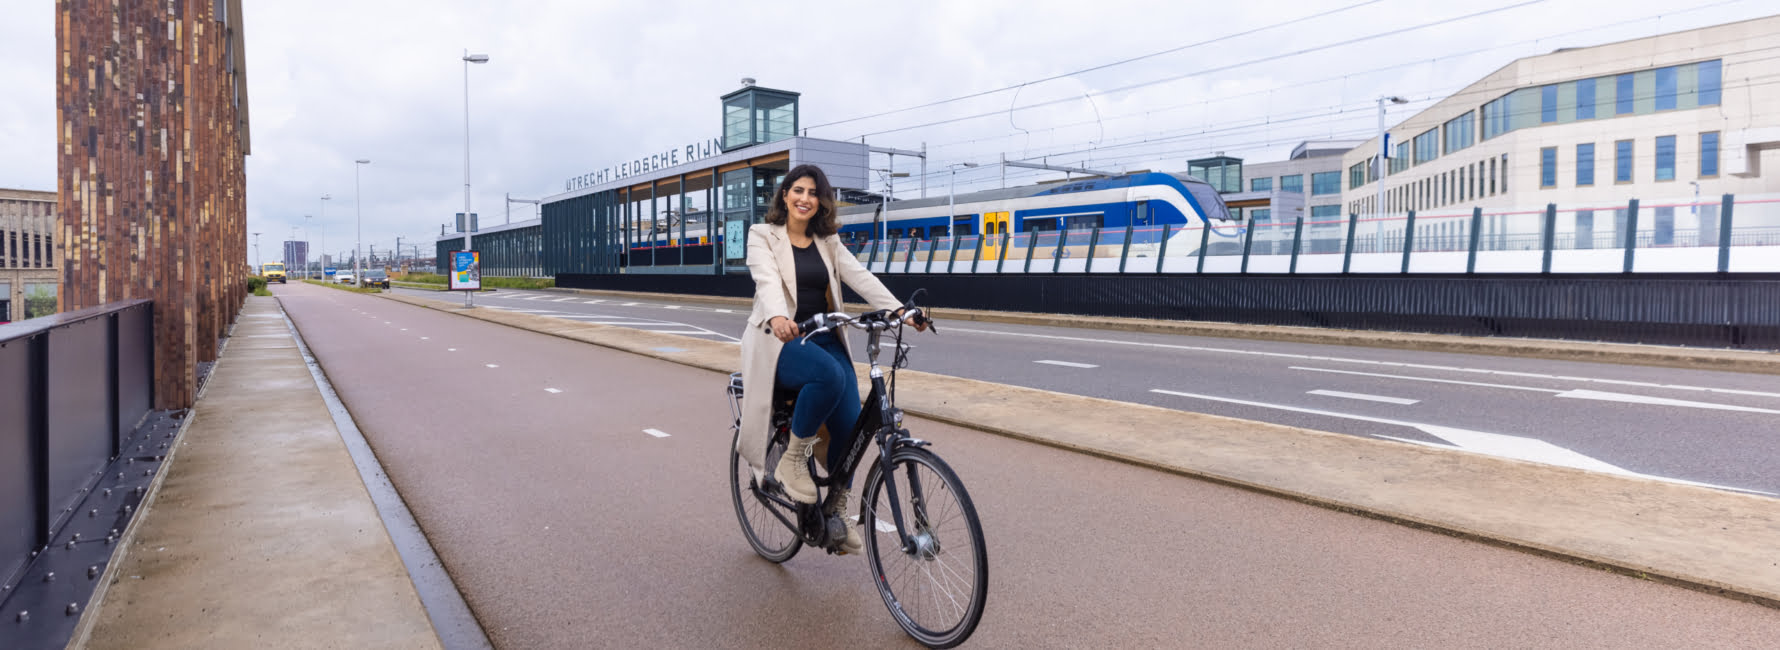 Projectmanager Saloua op de fiets bij station Leidsche RijnUtrecht